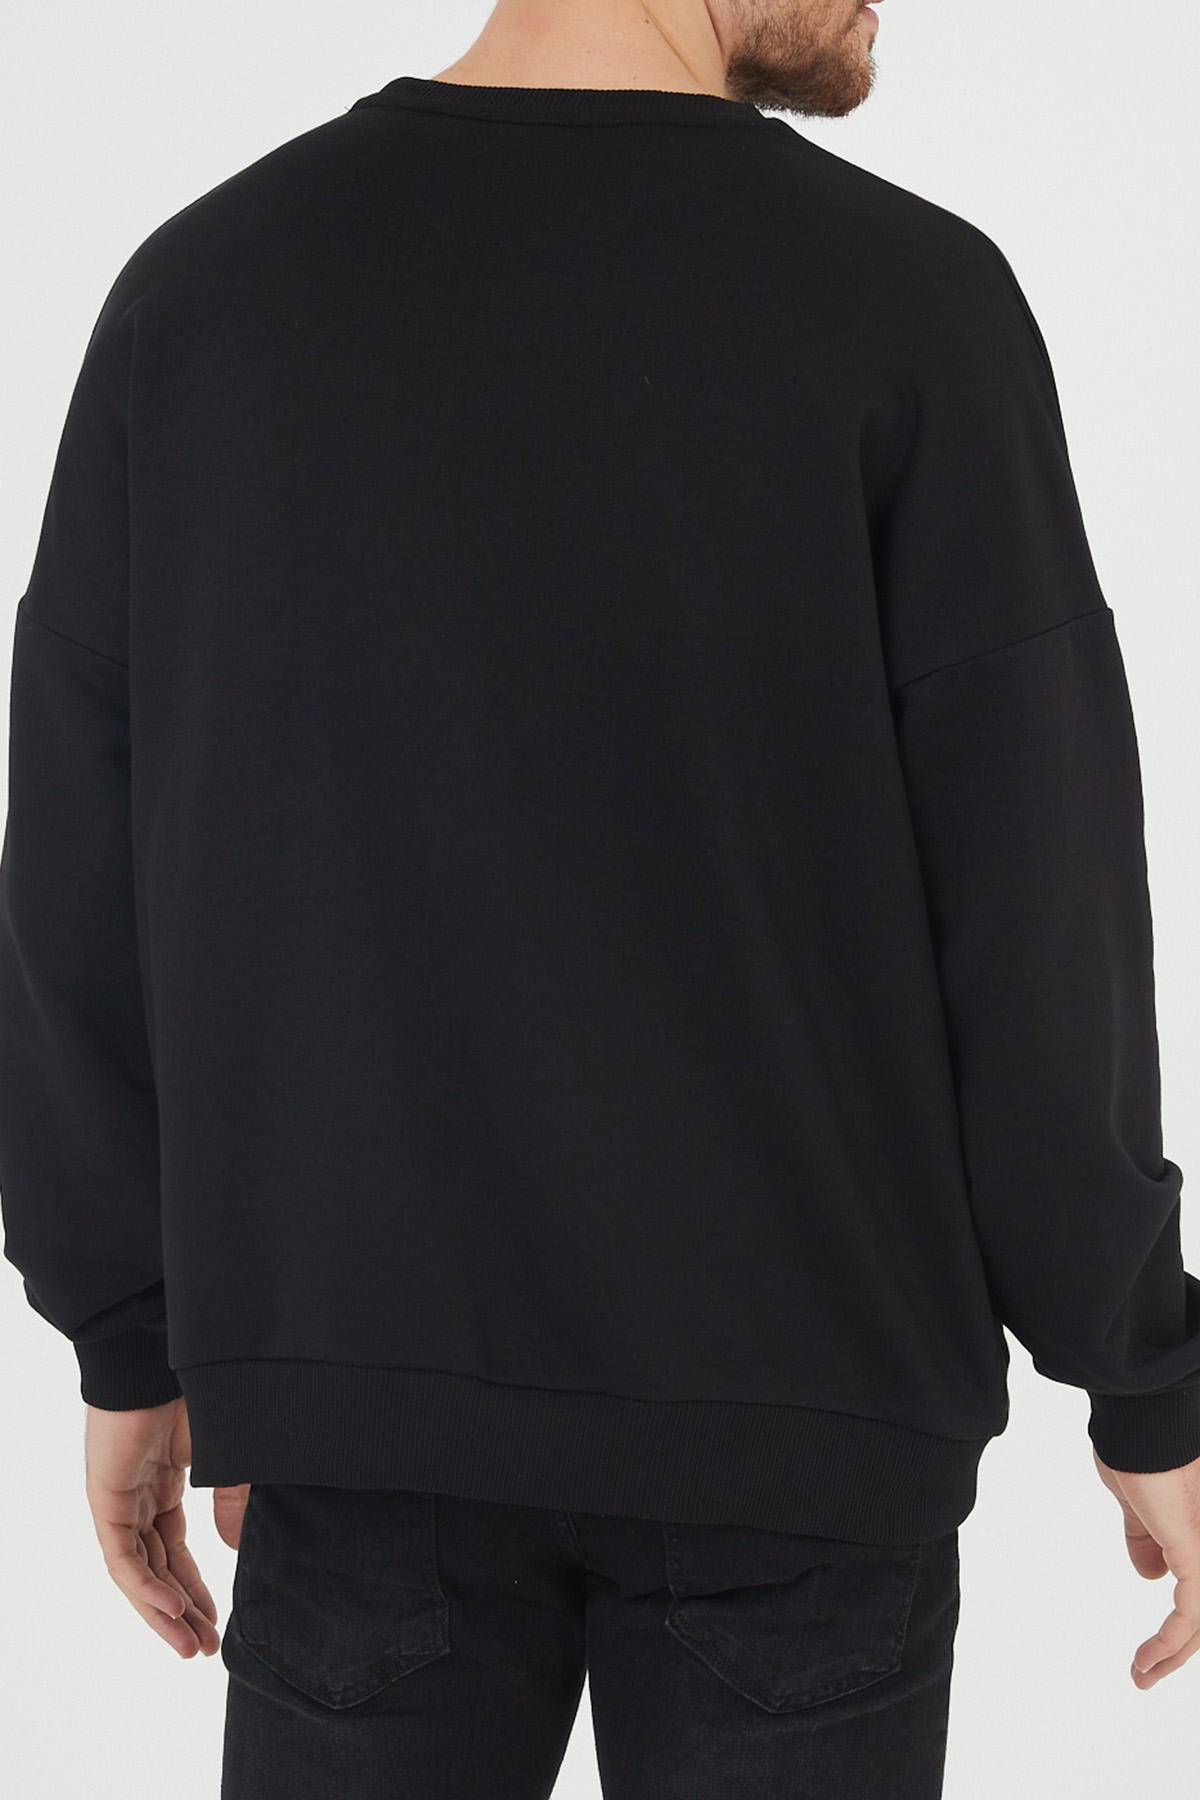 Siyah Cep Detaylı Sweatshirt 1KXE8-44395-02 - 7